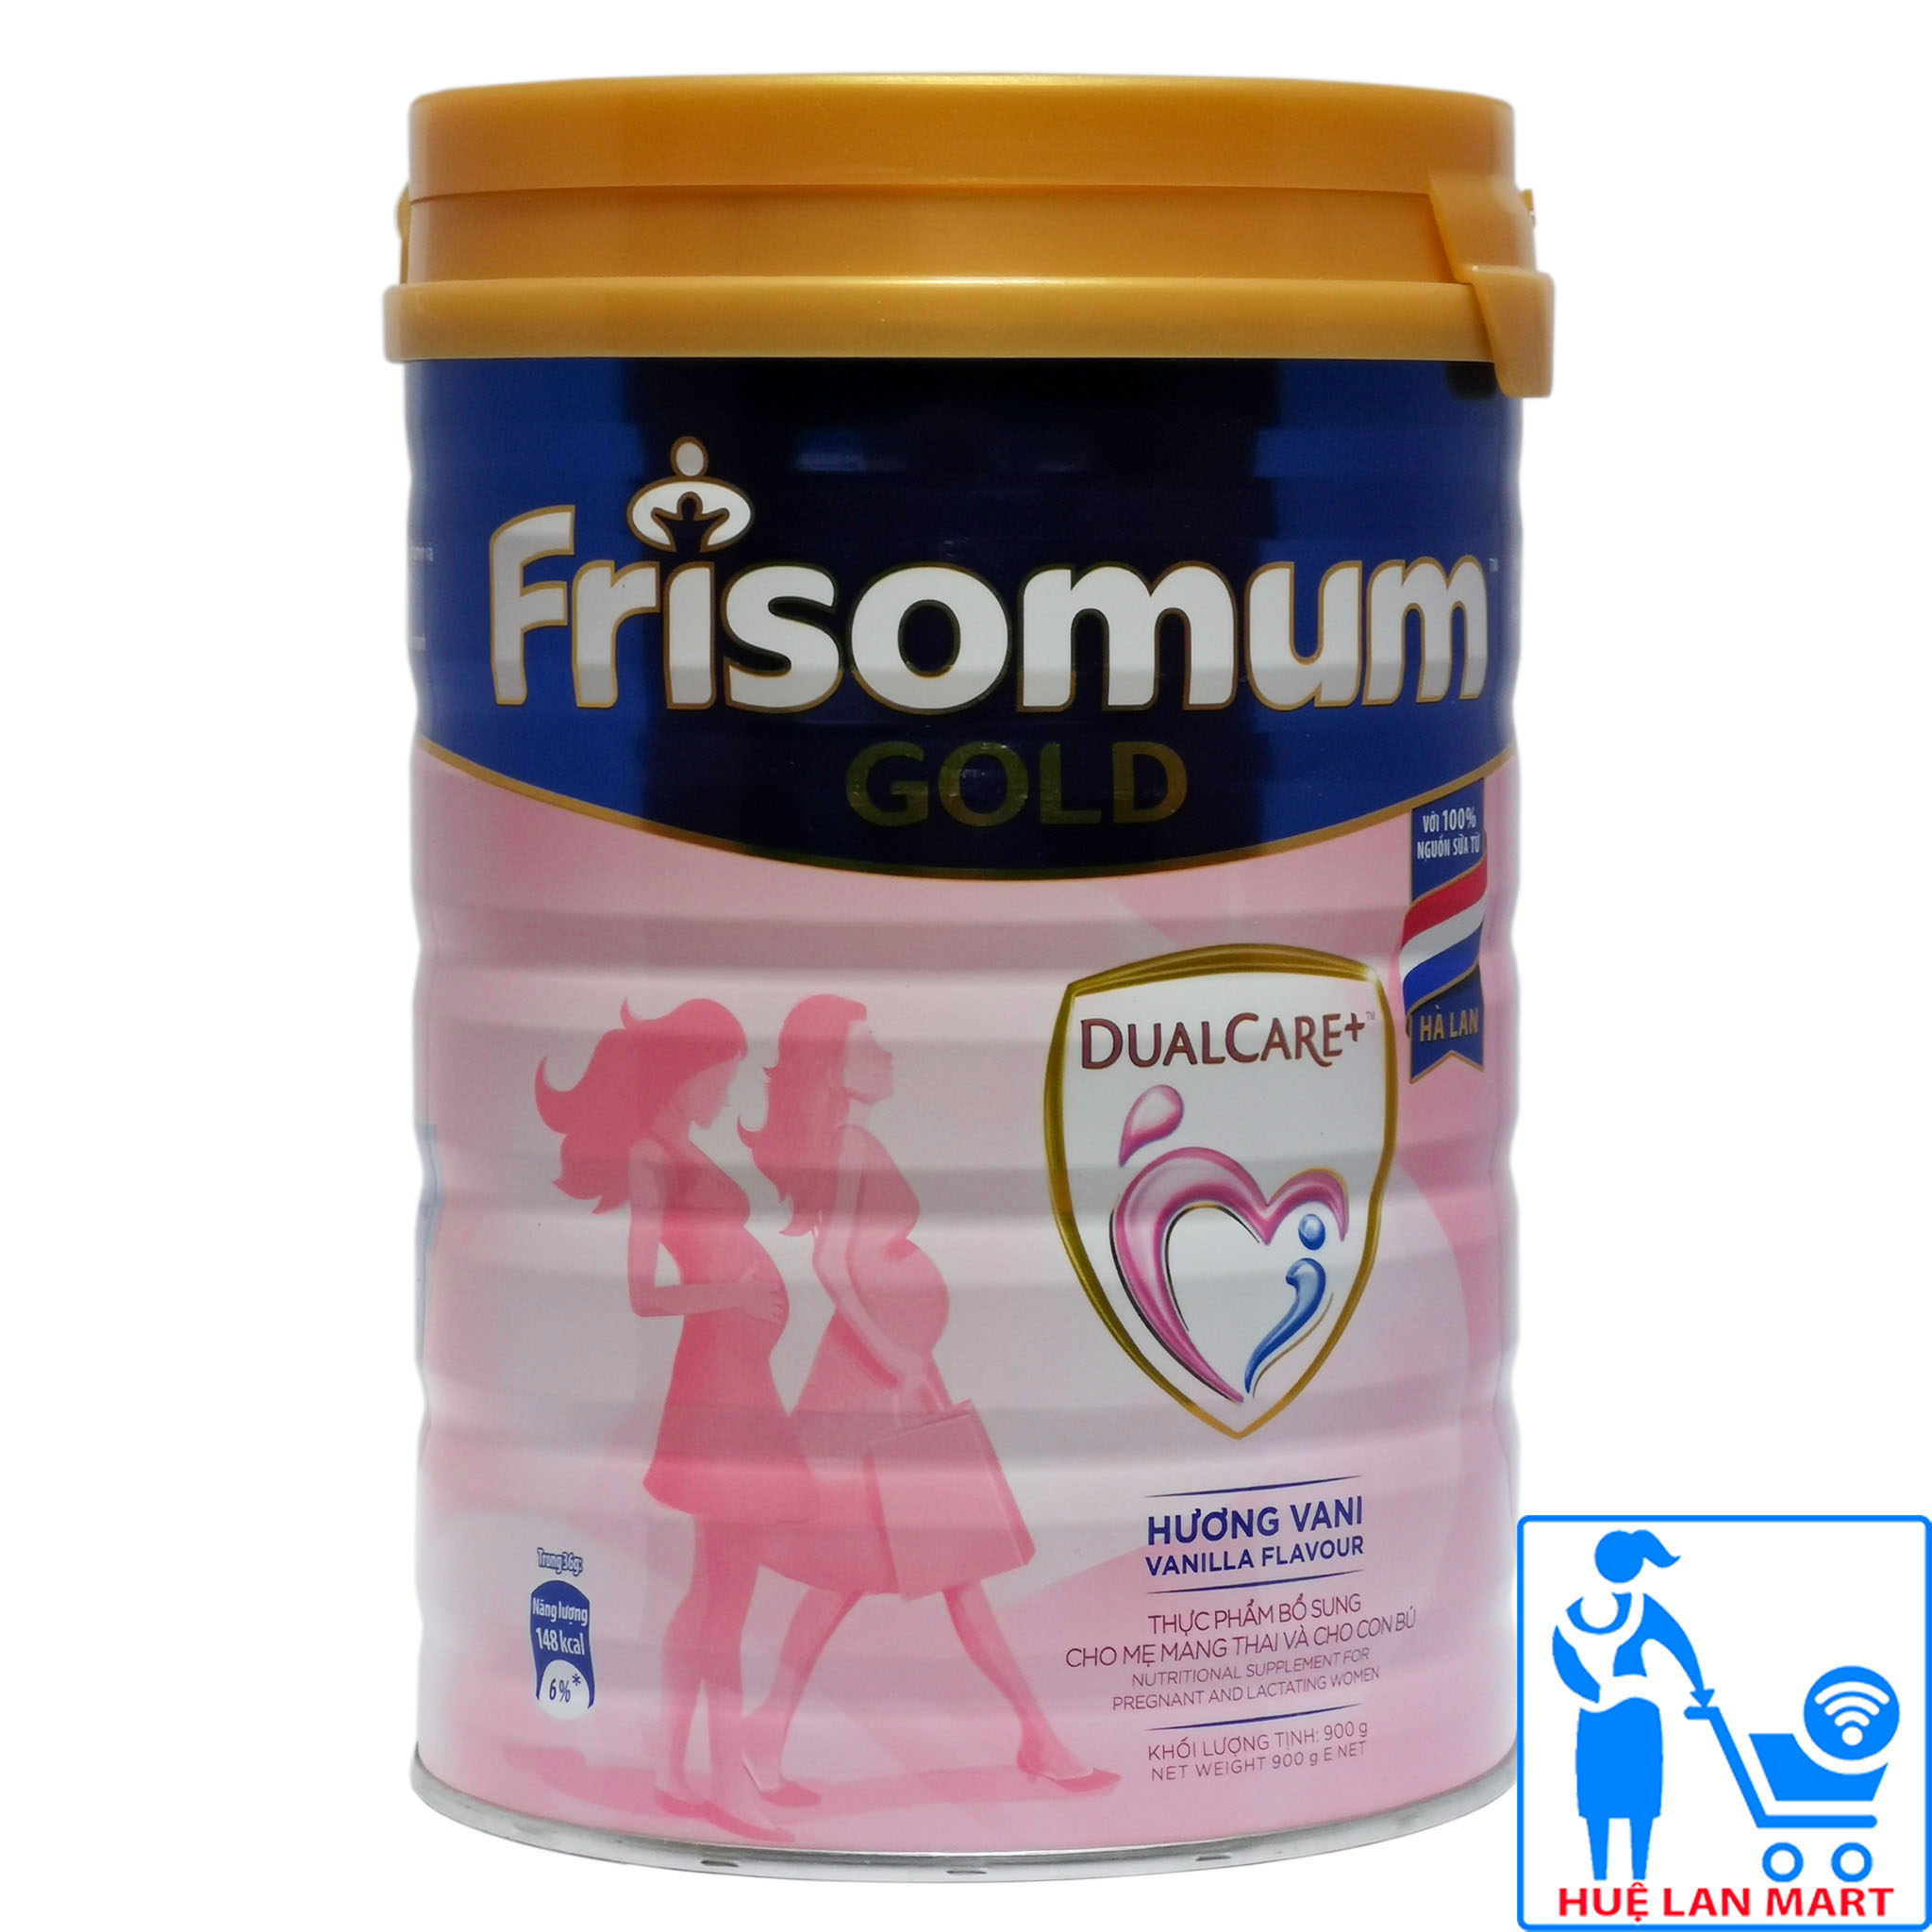 Sữa Bột Friesland Campina Frisomum Gold Dualcare+ Hương Vani Hộp 900g